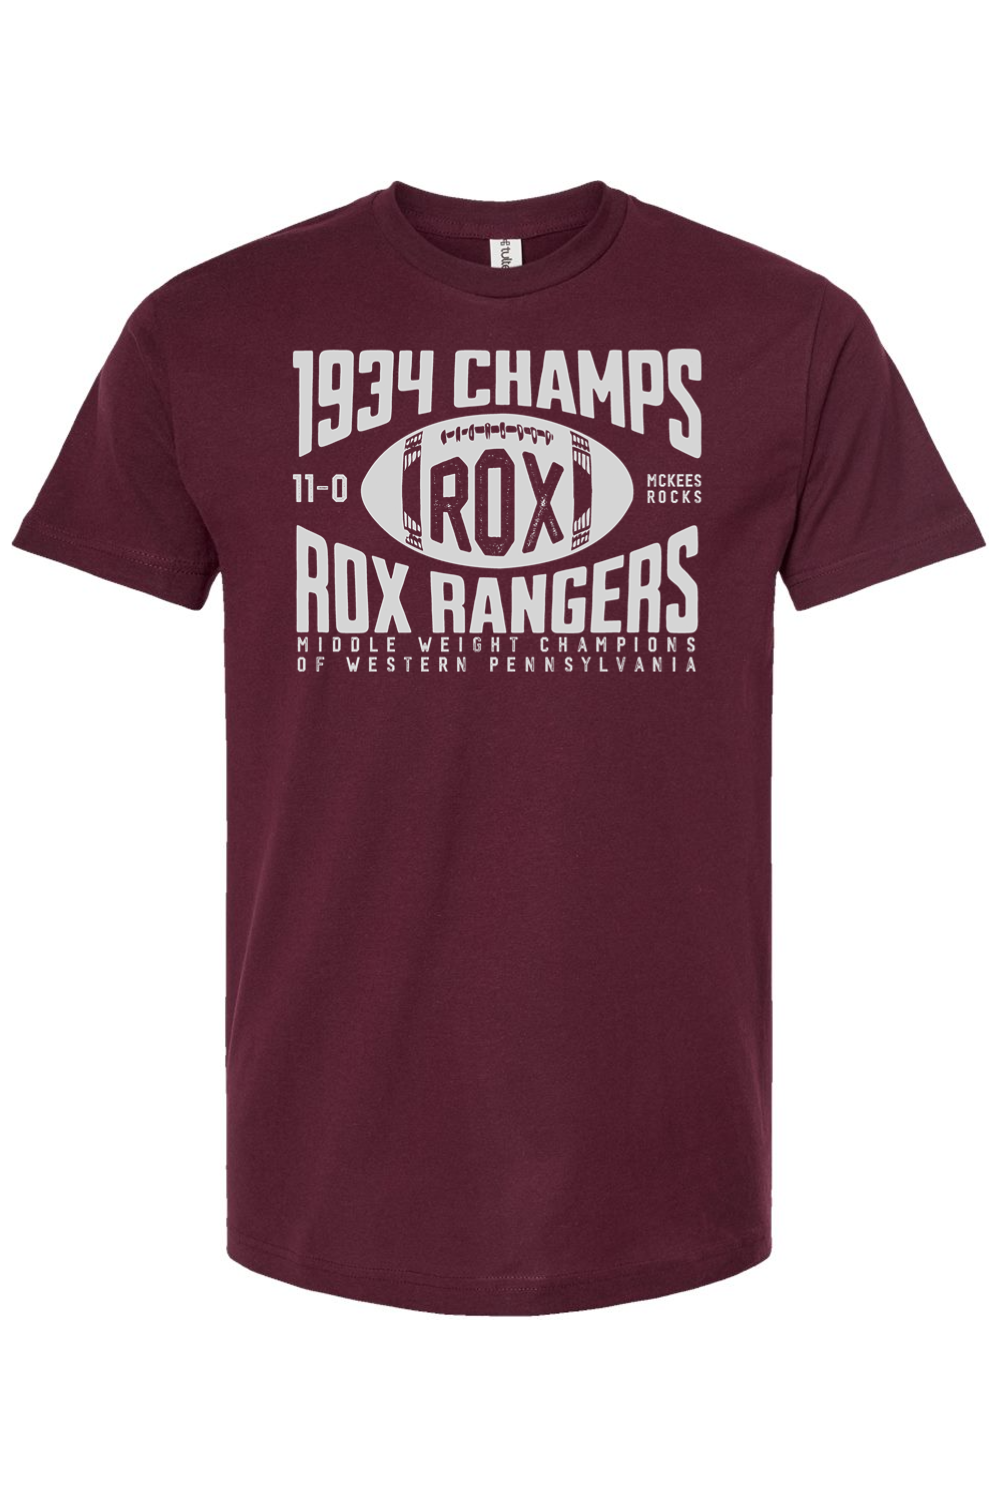 Rox Rangers Football - 1934 Champs - McKees Rocks - Yinzylvania